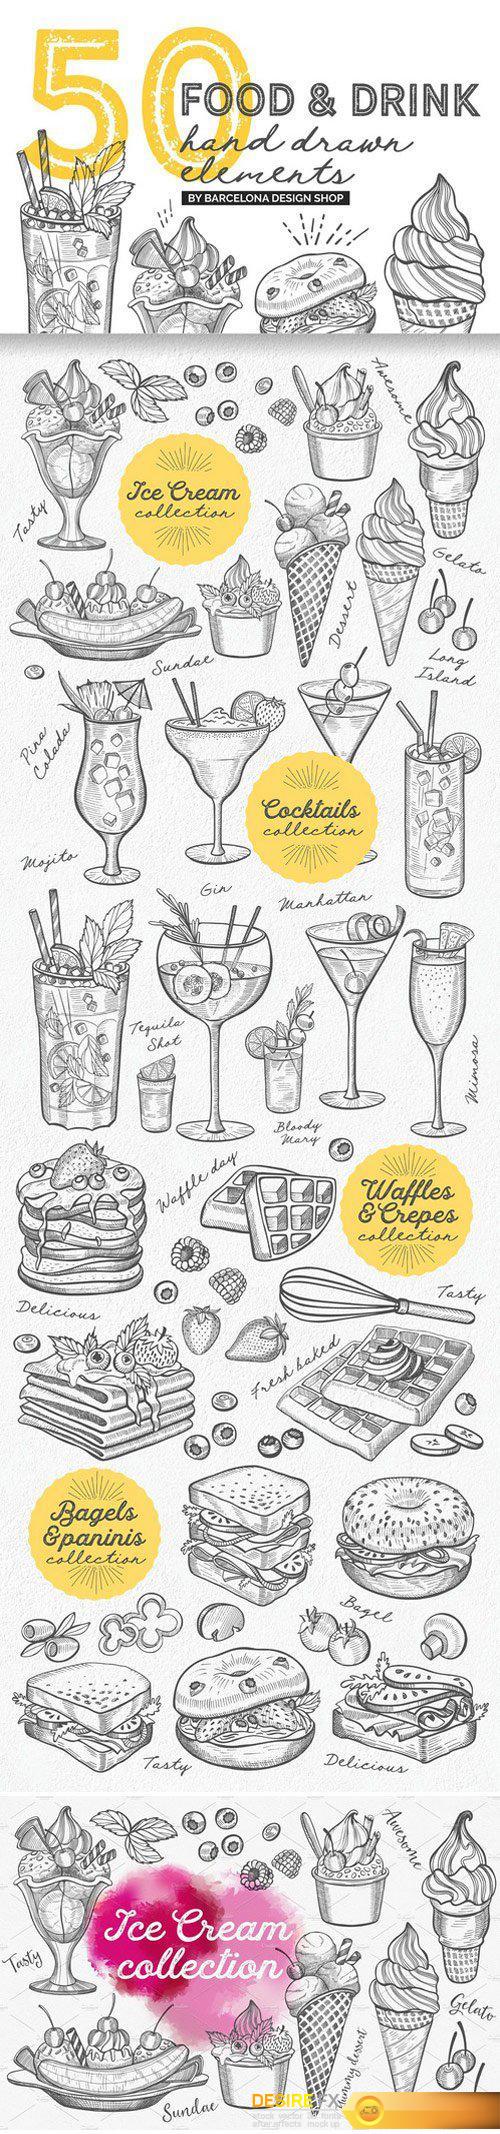 CM - Food & Drink Illustrations 2379402